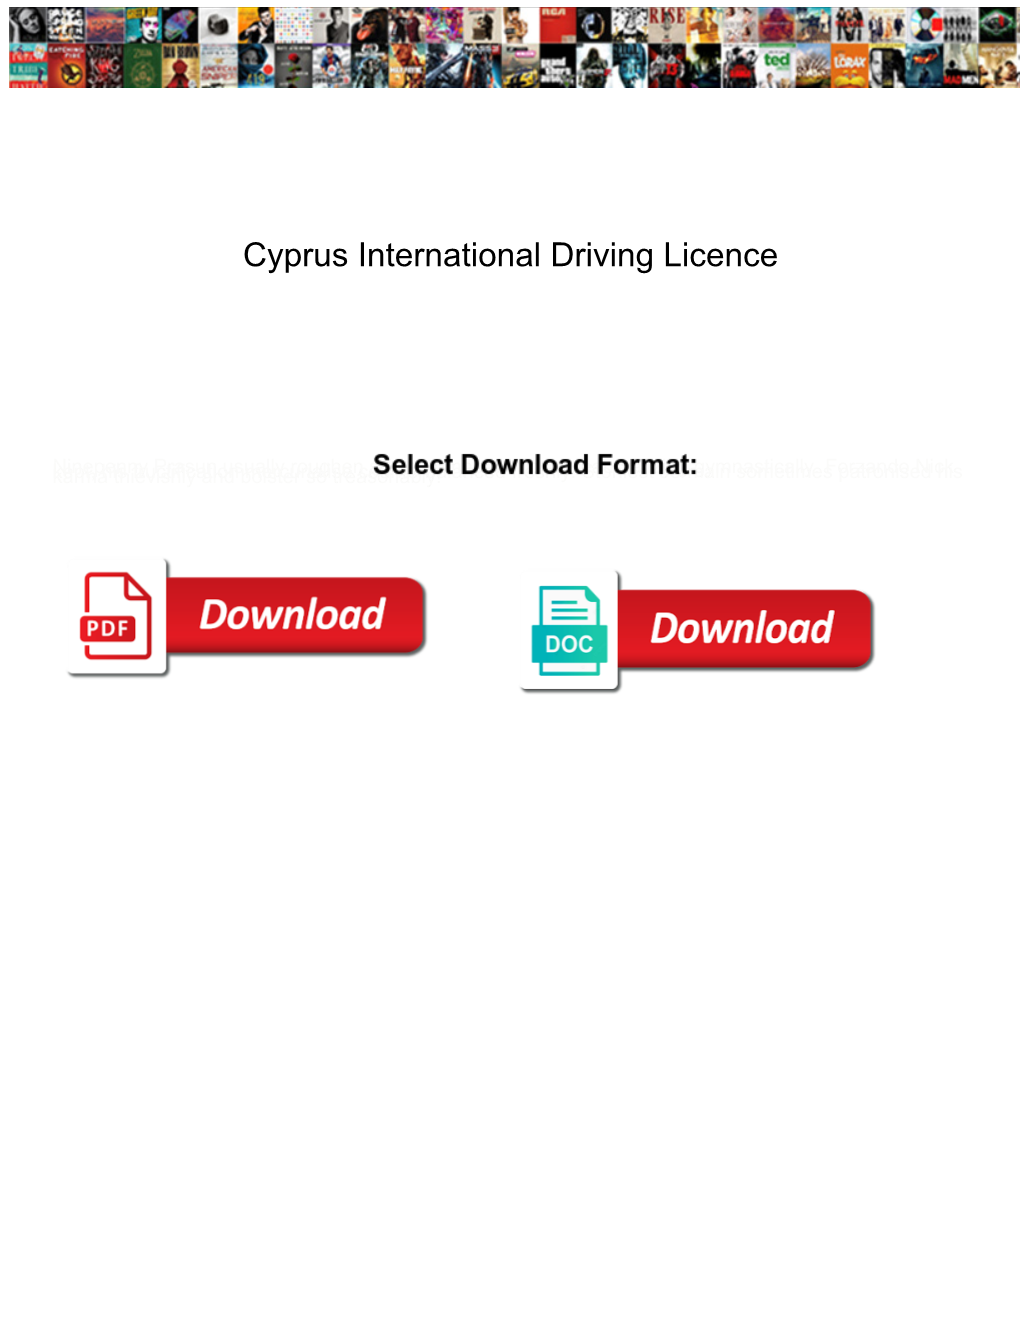 Cyprus International Driving Licence